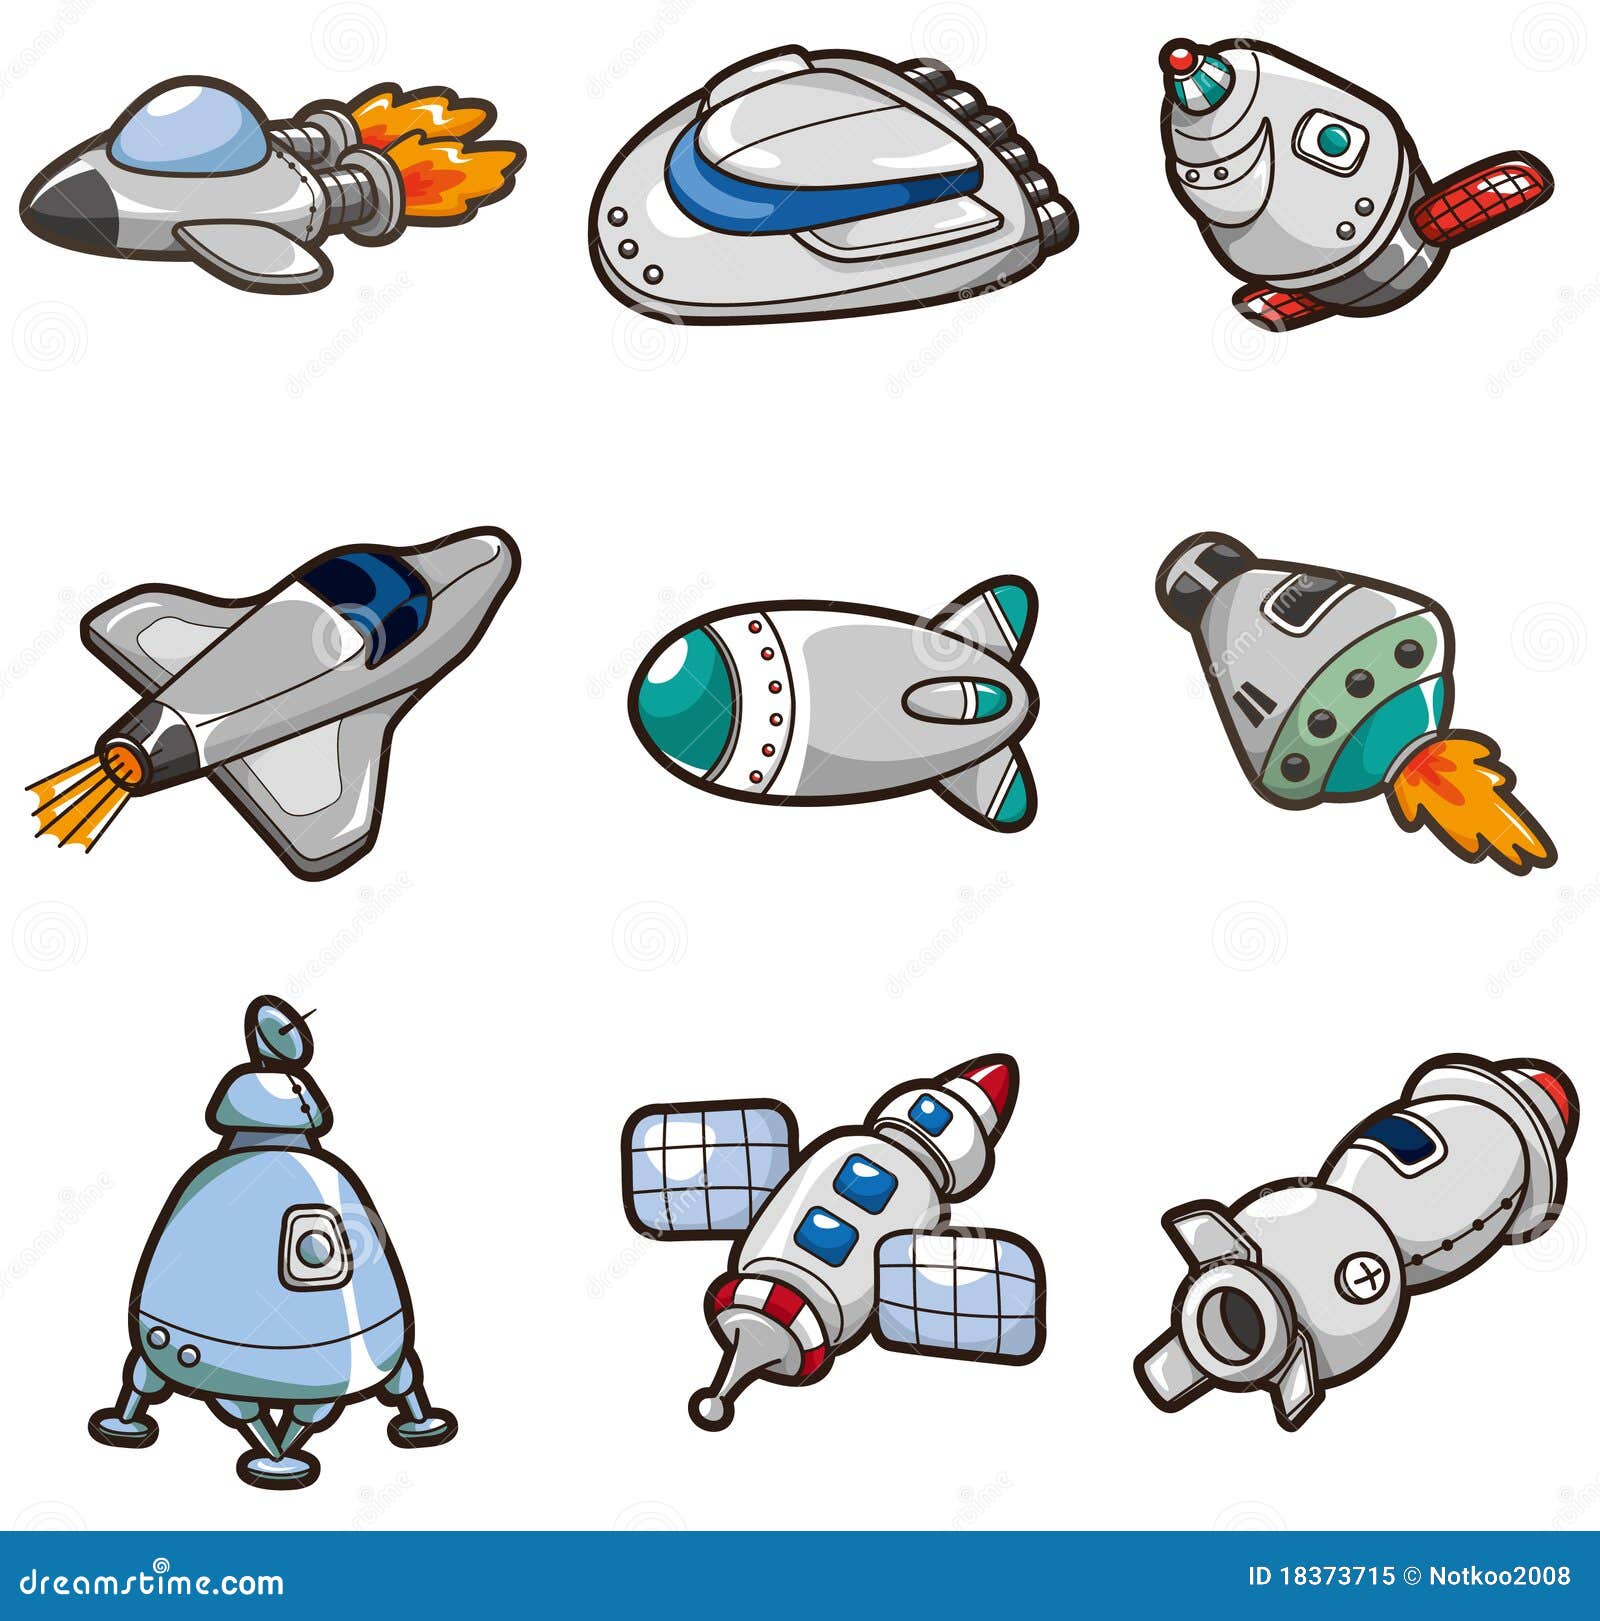 Cartoon Space Ship Drawing - 